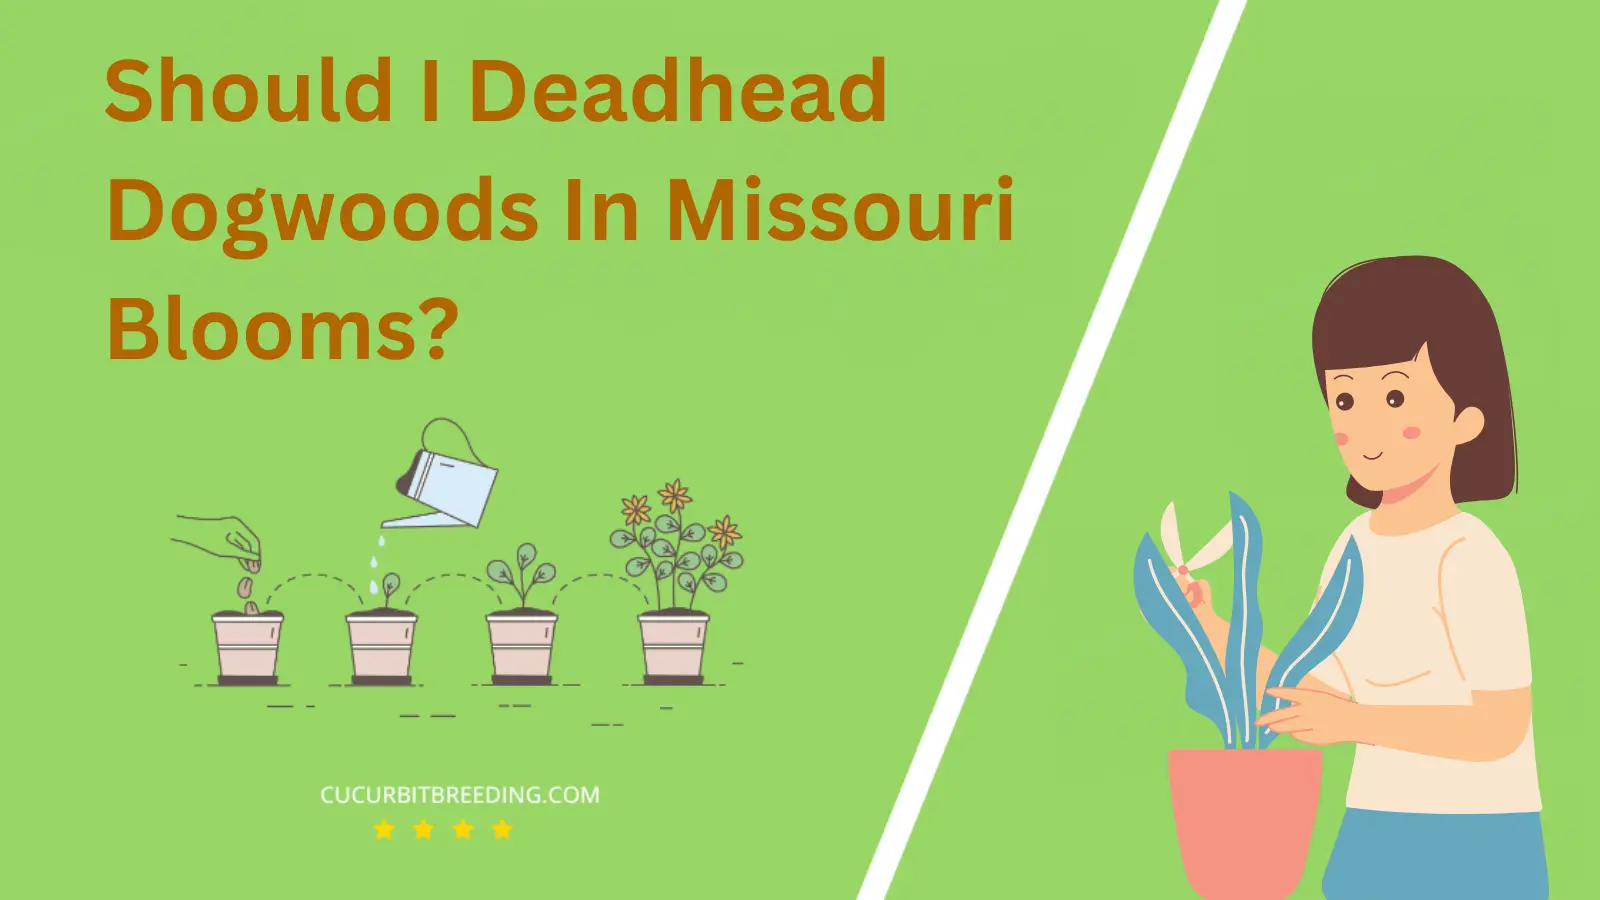 Should I Deadhead Dogwoods In Missouri Blooms?